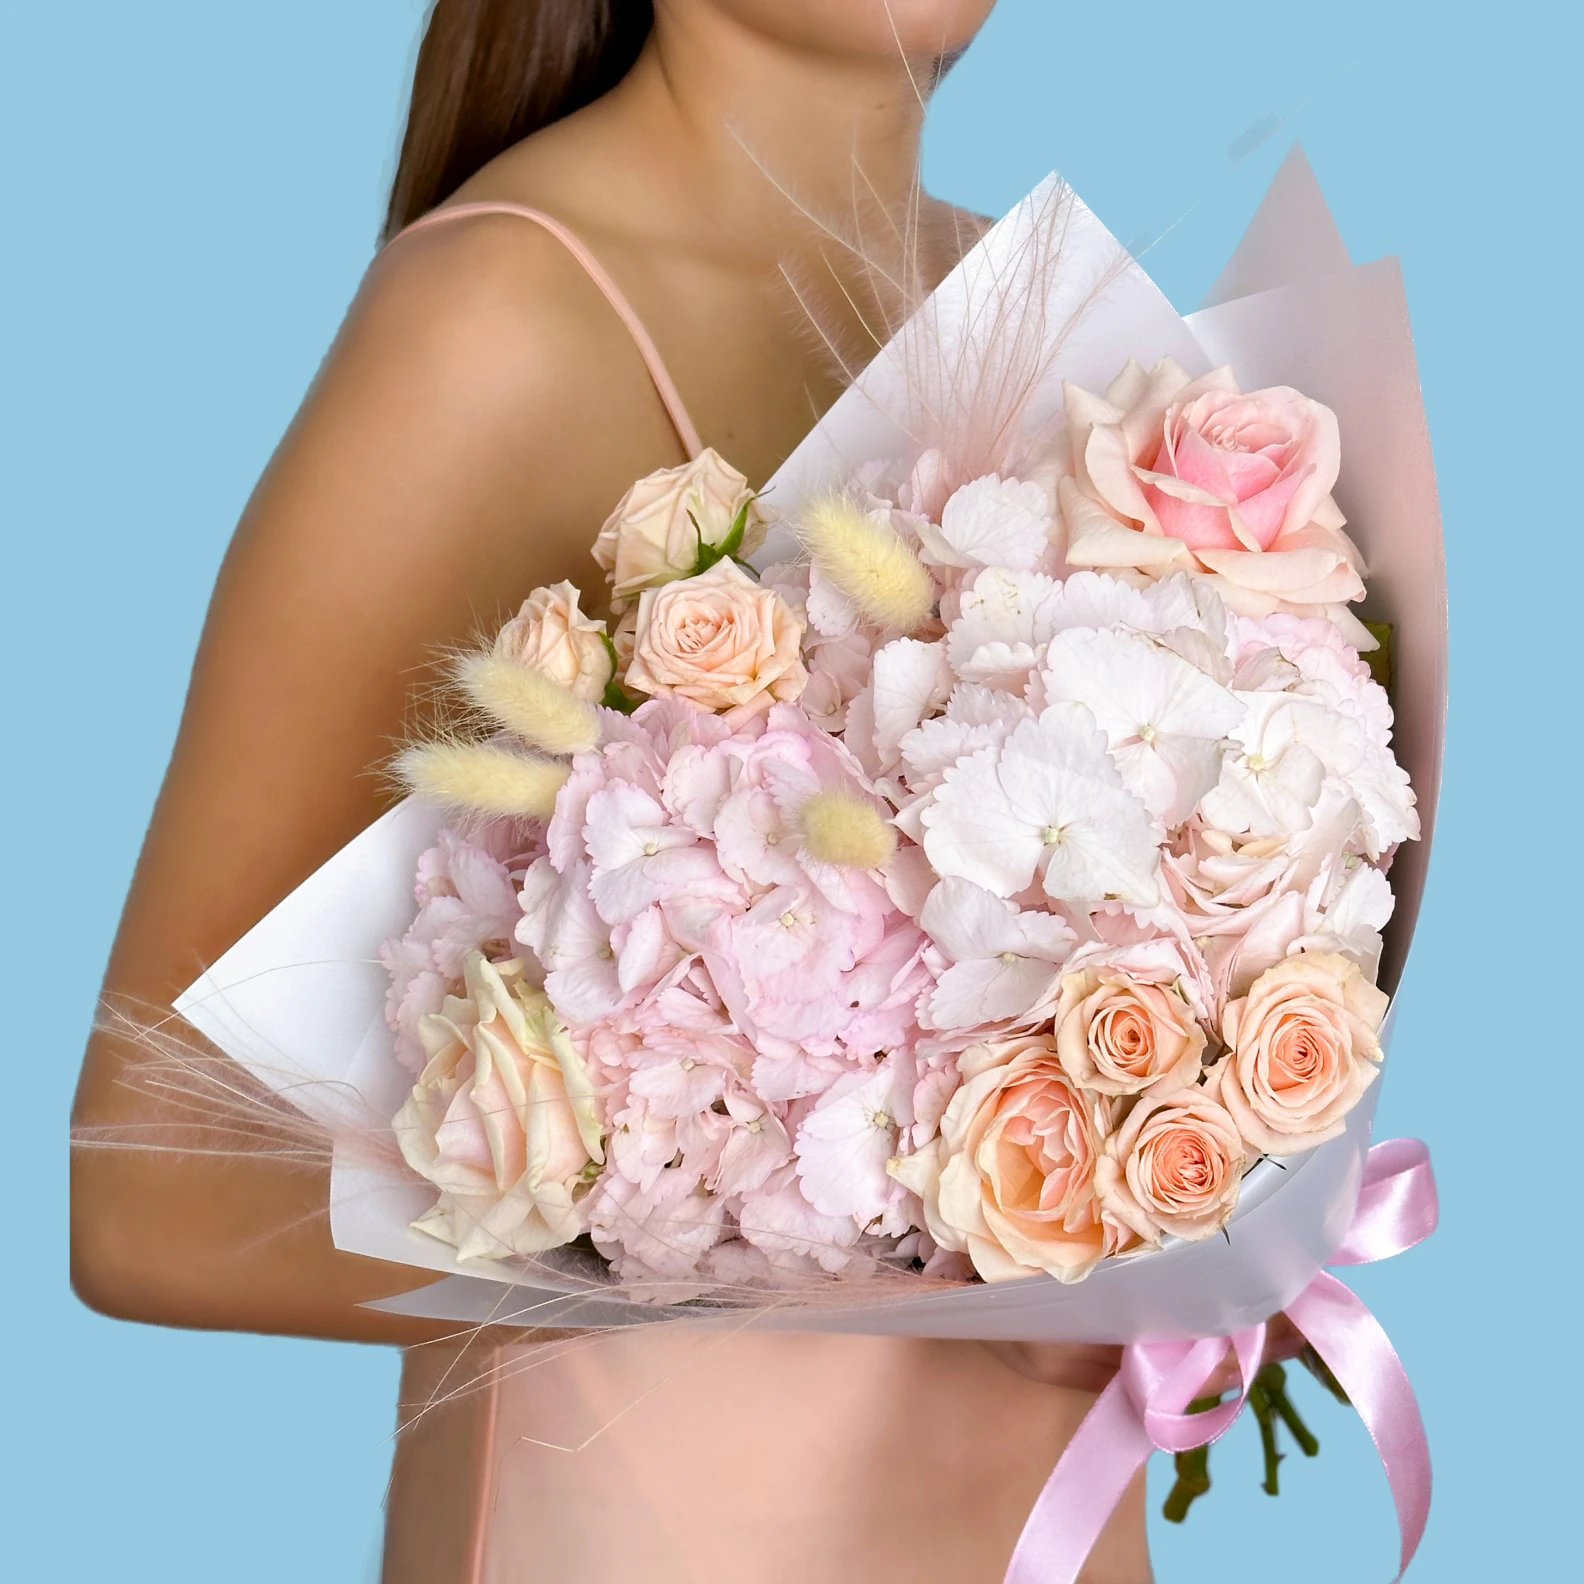 Trendy Bouquet - image №4